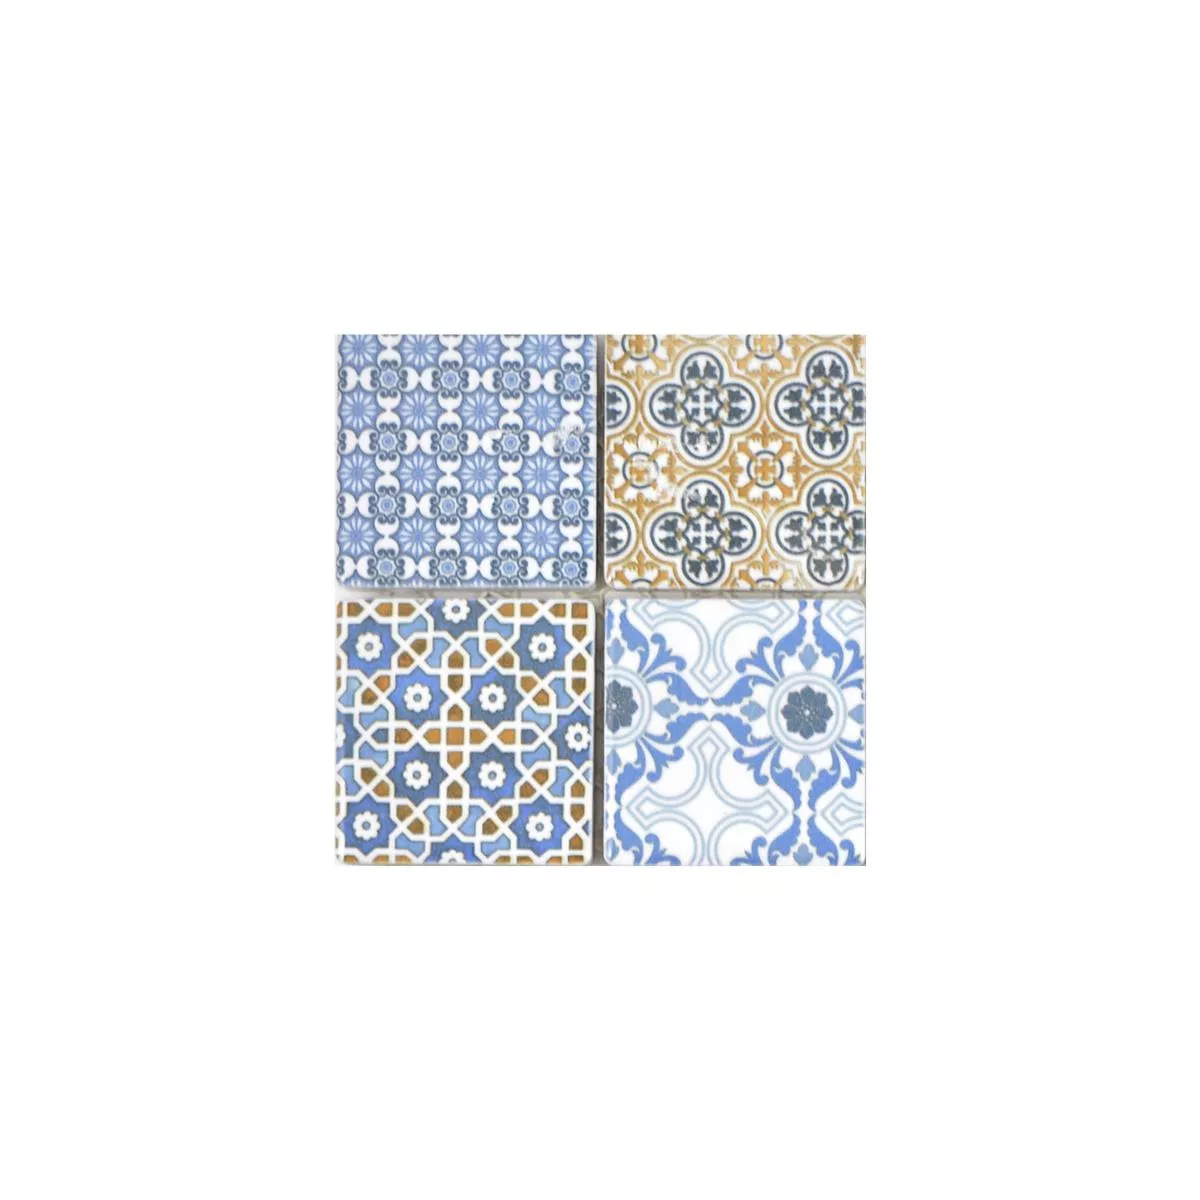 Sample Ceramic Mosaic Tiles Daymion Retro Optic Blue Brown 